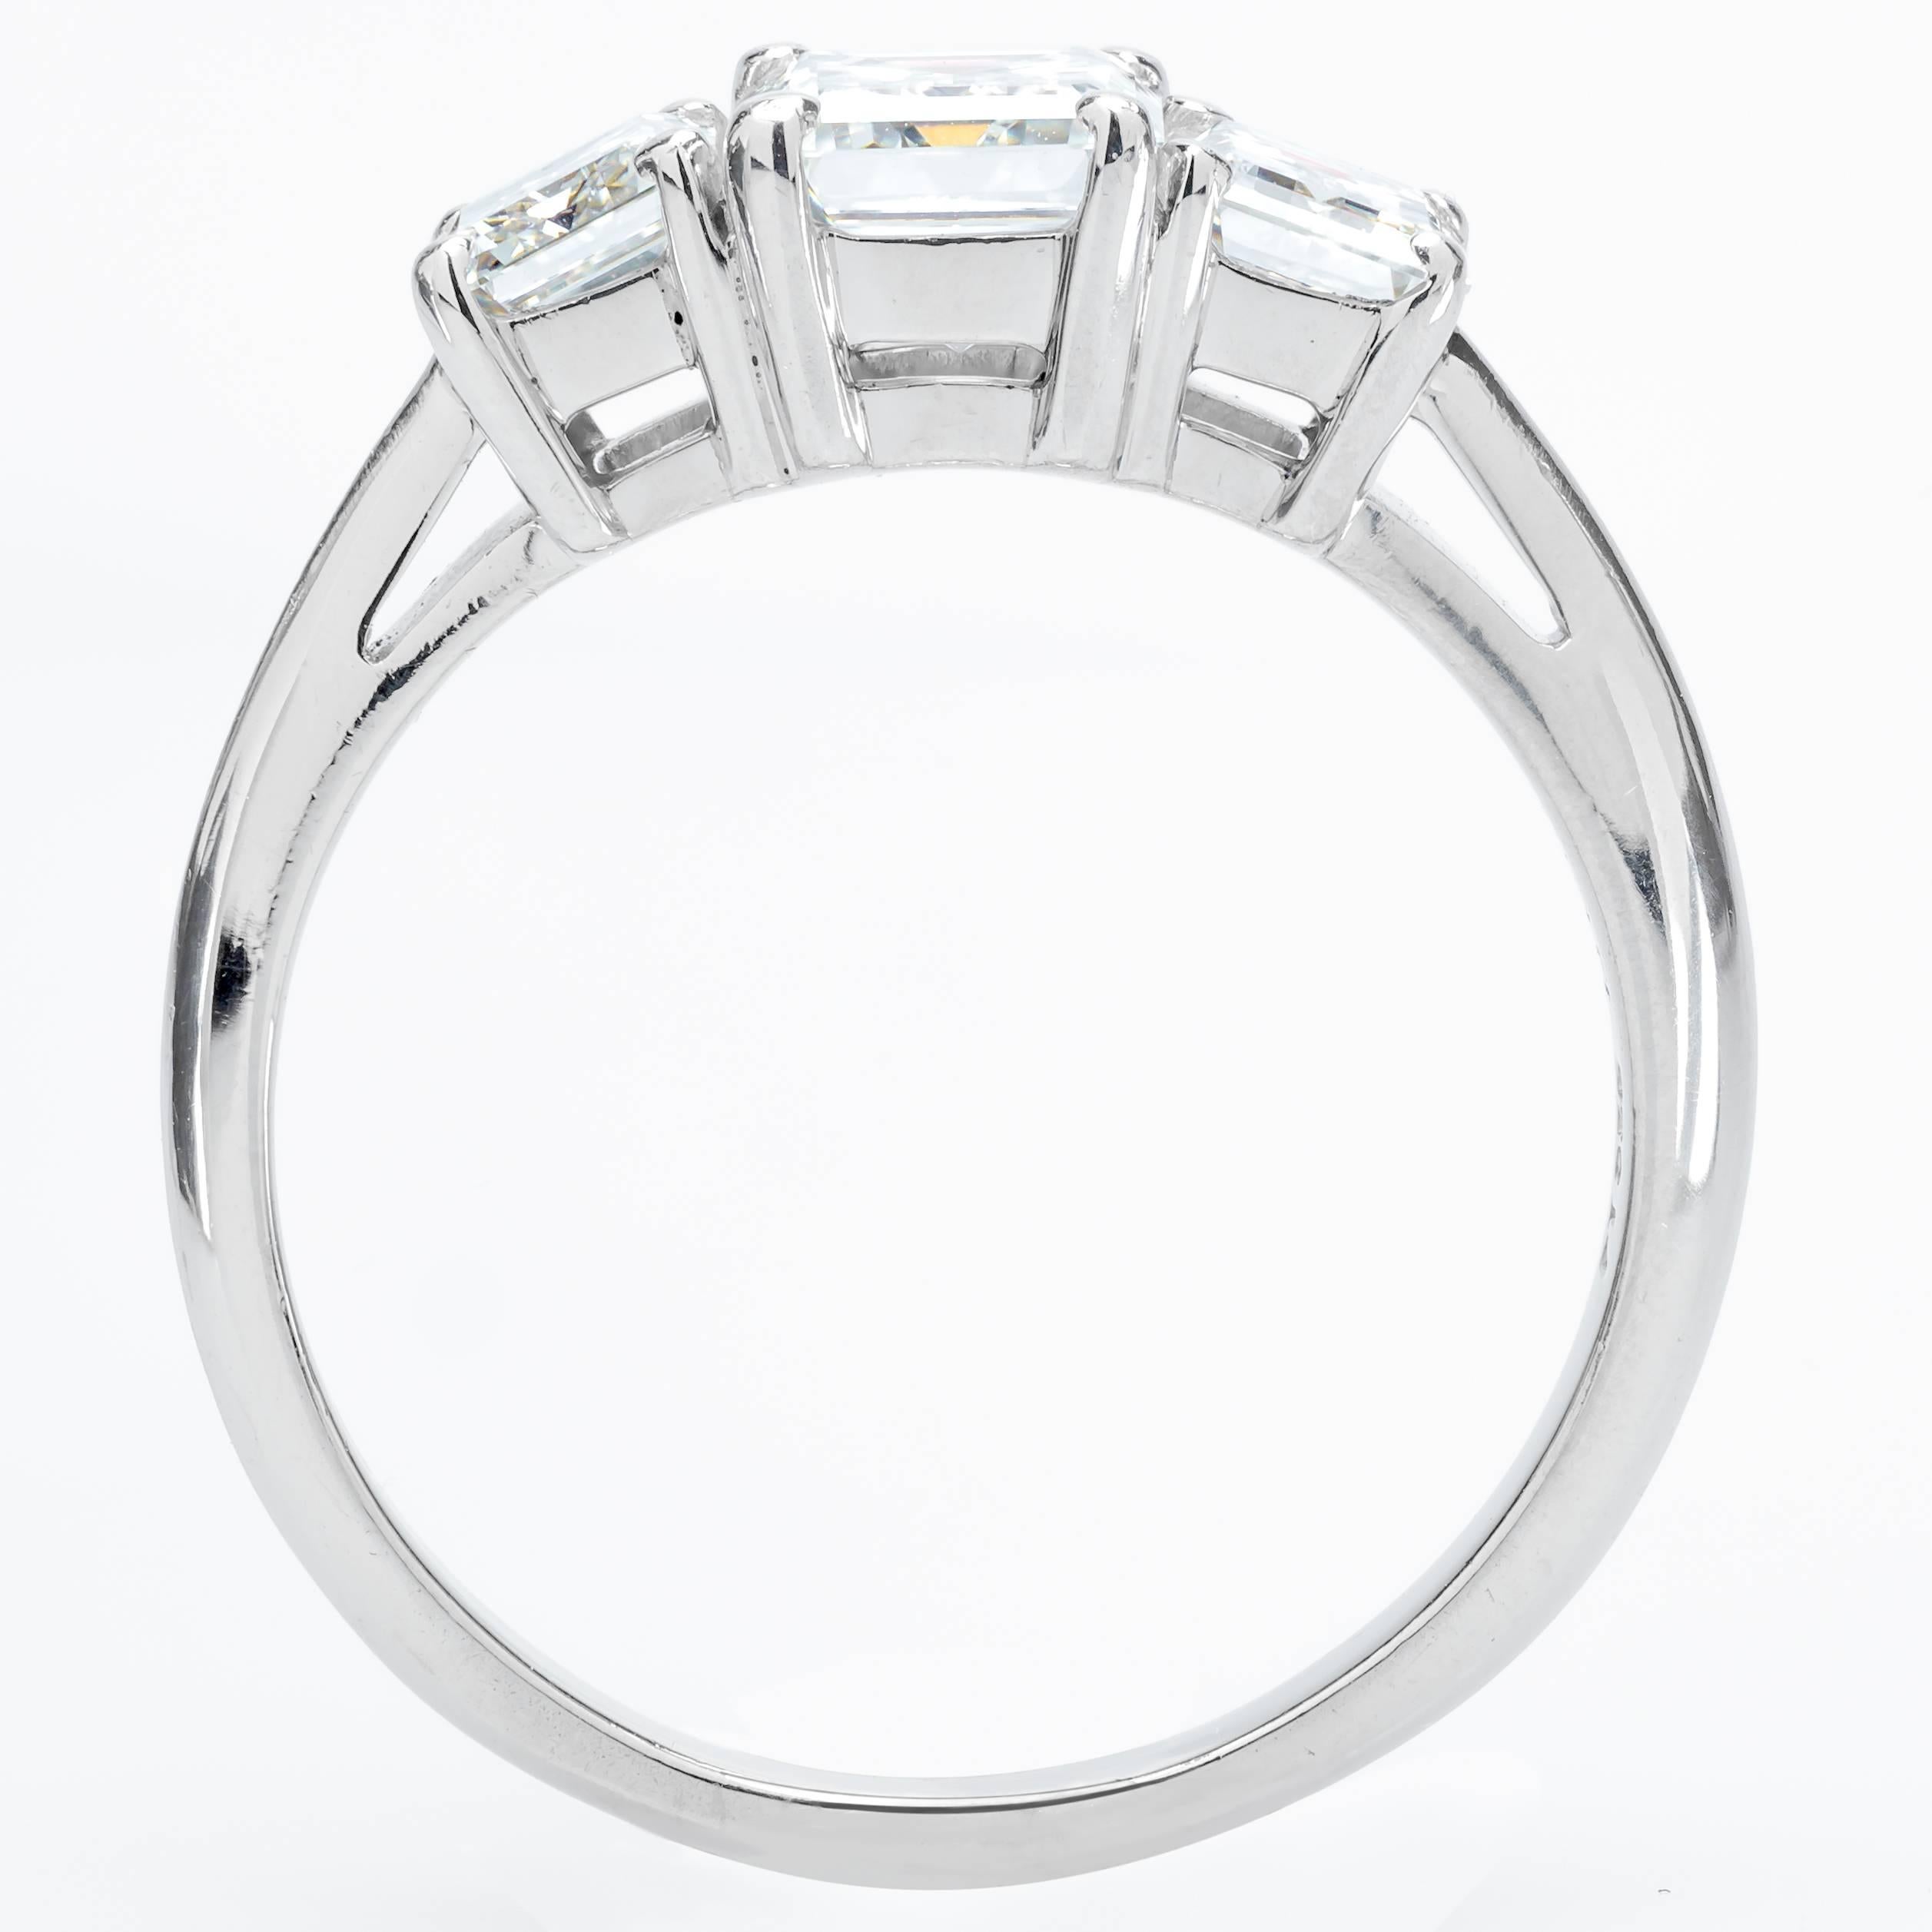 This platinum size 6 Tiffany & Co. ring has 3 emerald cut diamonds.  The diamonds measure the following:
- Center: 1.01ct G/VVS2 6.46mm x 5.15mm x 3.53mm
- Side: 0.51ct G/VVS2 5.35mm x 3.96mm x 2.70mm
- Side: 0.55ct G/VVS2 5.39mm x 4.02mm x